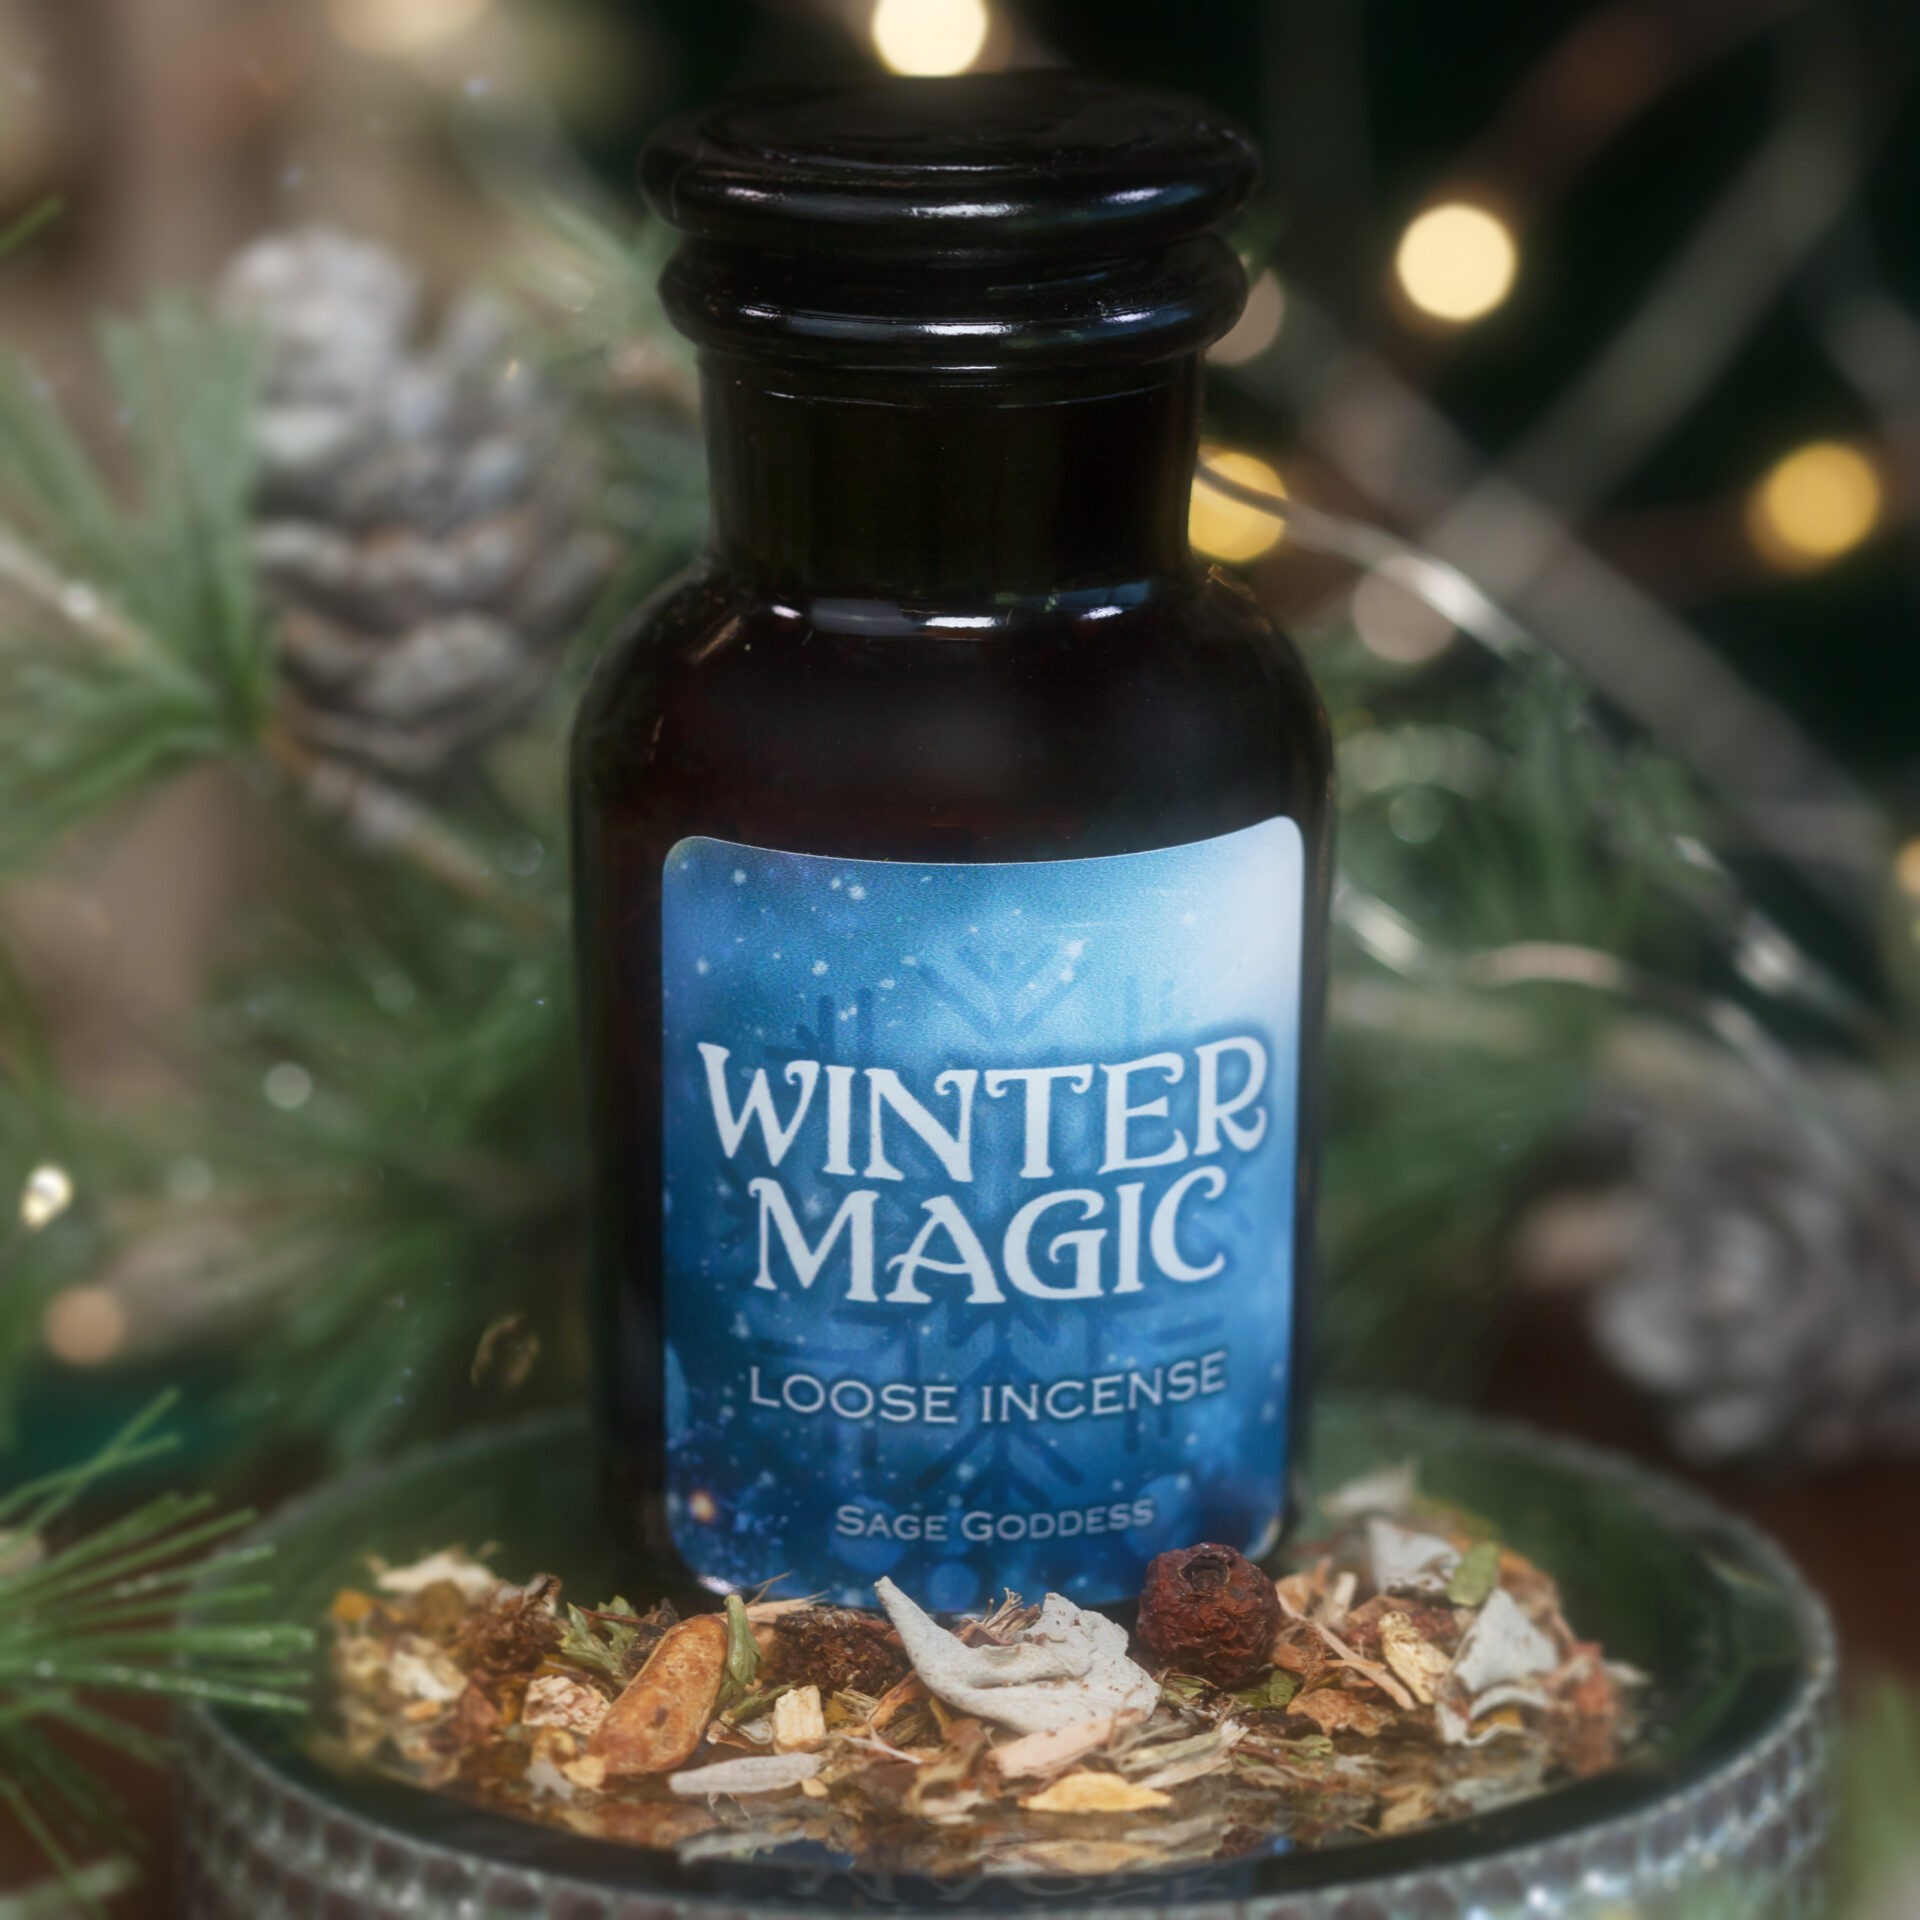 Sage Goddess Winter Magic Incense Blend for seasonal enchantment